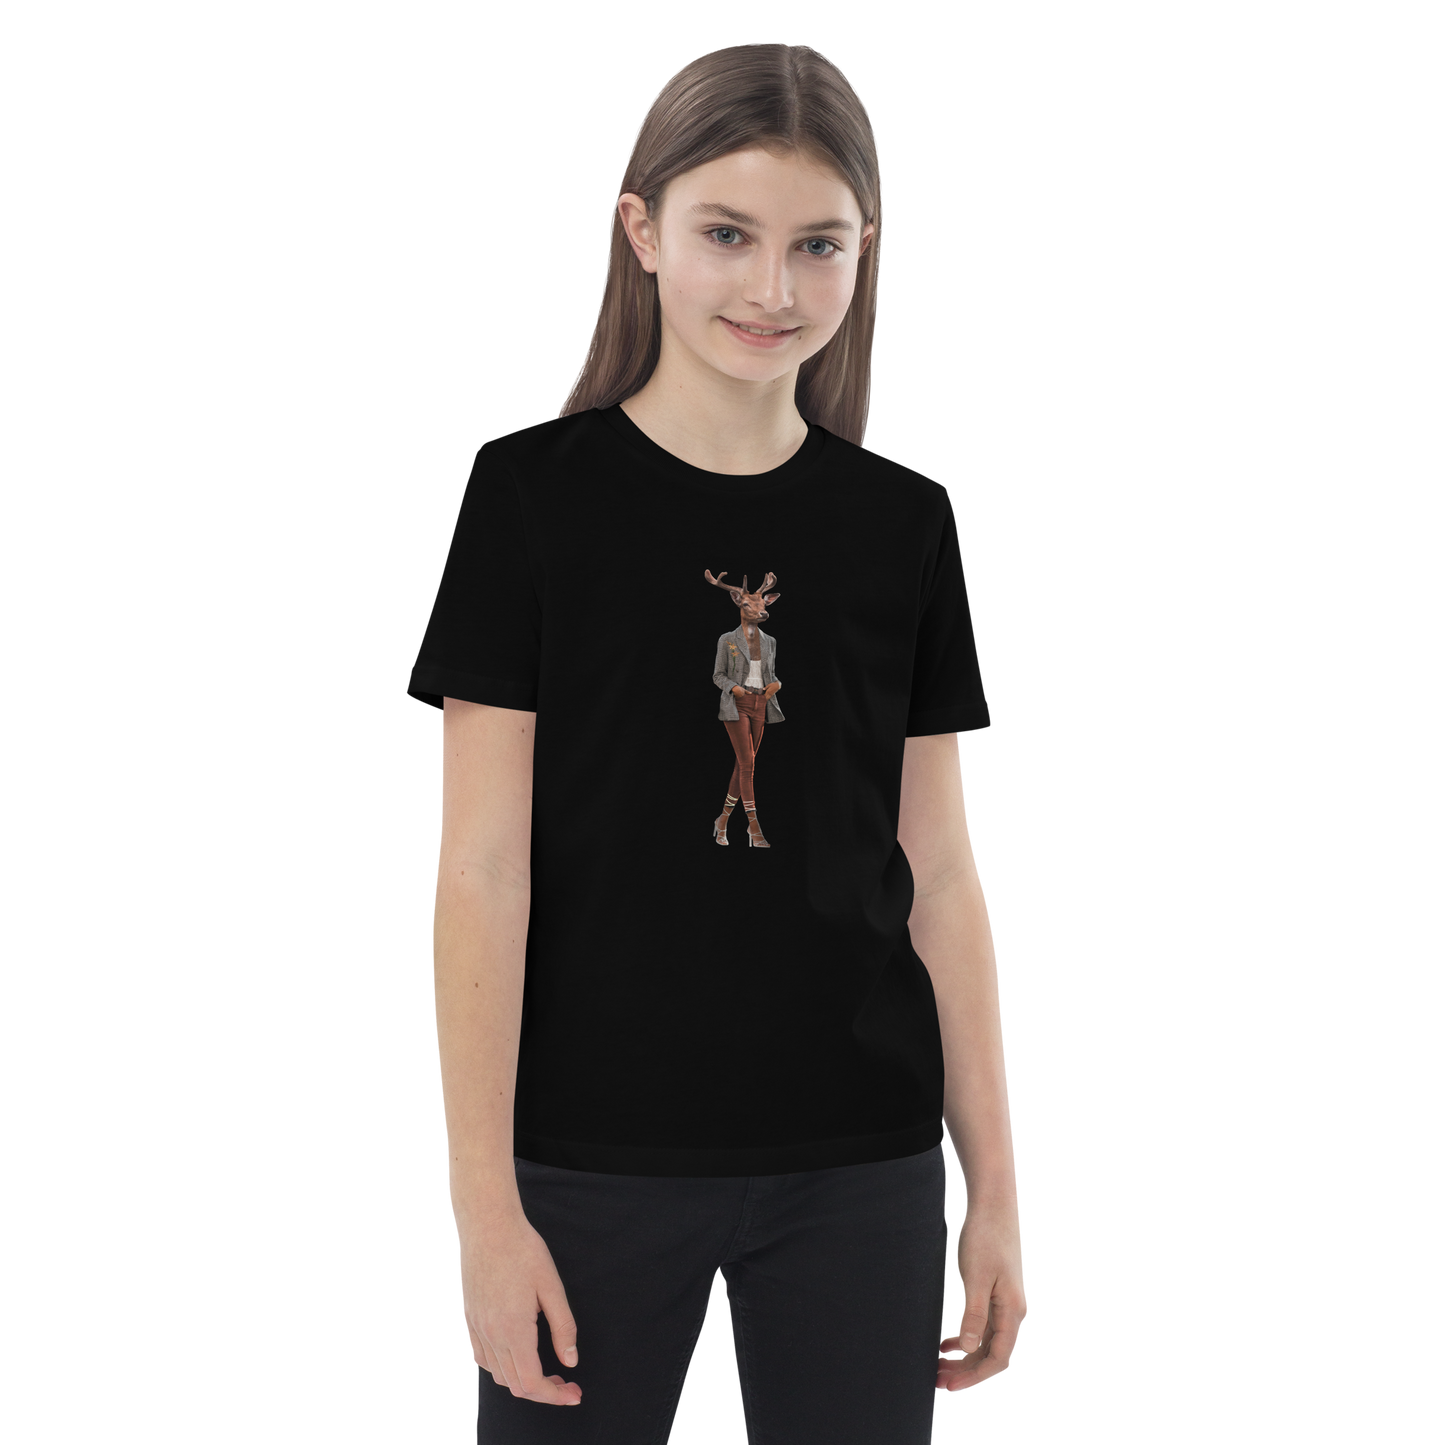 Young girl wearing a Black Anthropomorphic Deer Organic Cotton Kids T-Shirt featuring an Anthropomorphic Deer graphic on the chest - Kids' Graphic Tees - Funny Animal T-Shirts - Boozy Fox